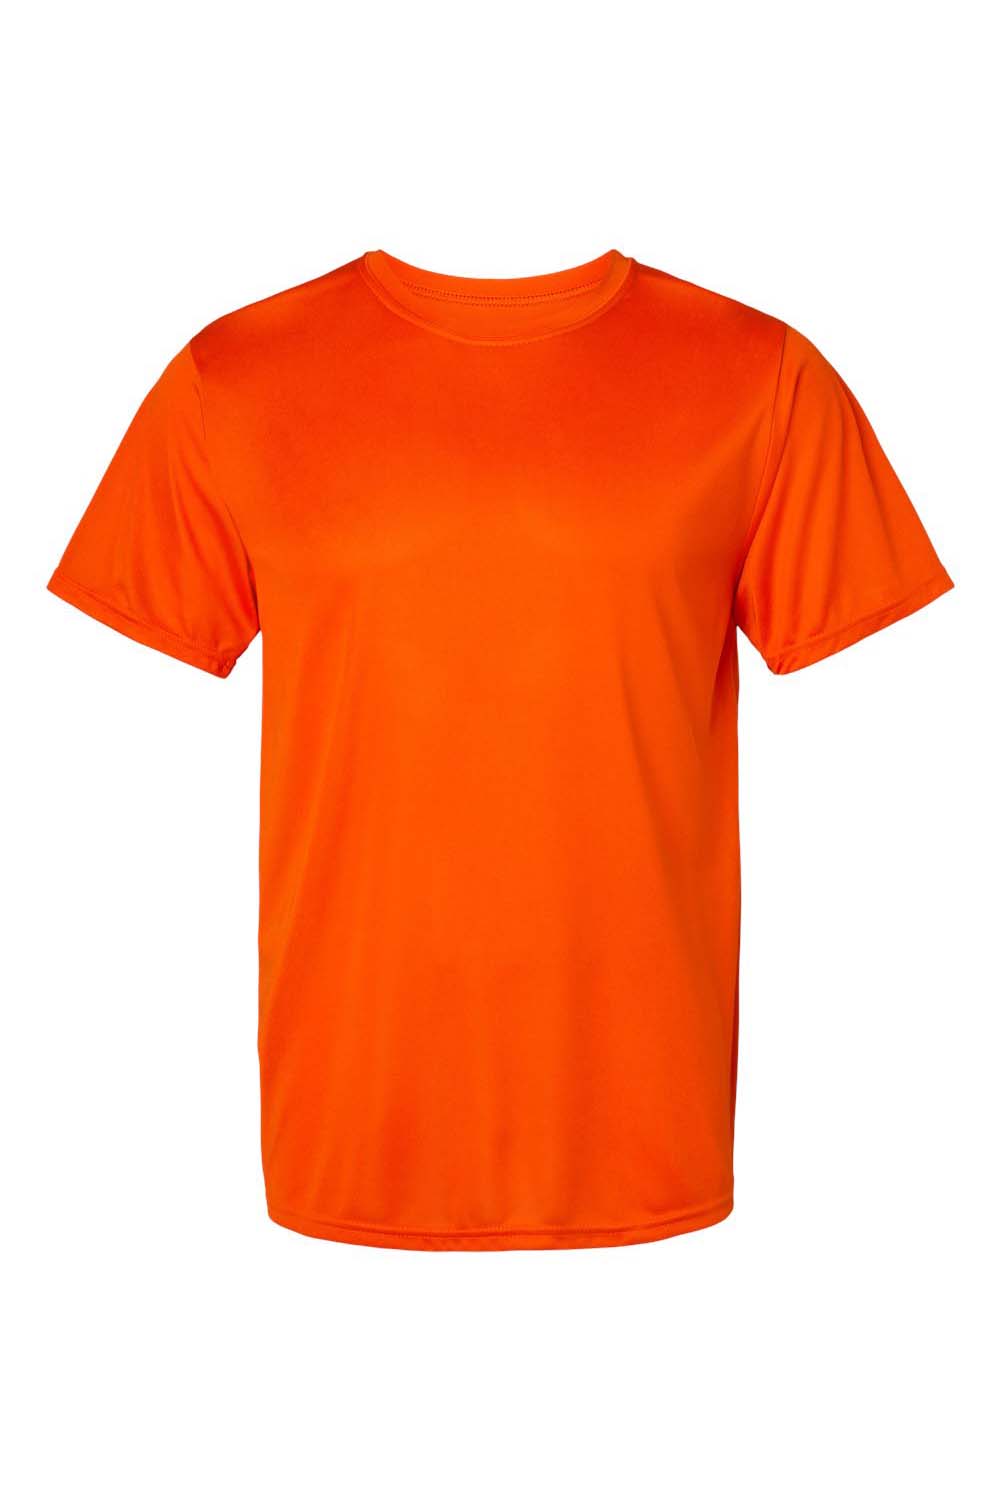 Augusta Sportswear 790 Mens Moisture Wicking Short Sleeve Crewneck T-Shirt Orange Model Flat Front